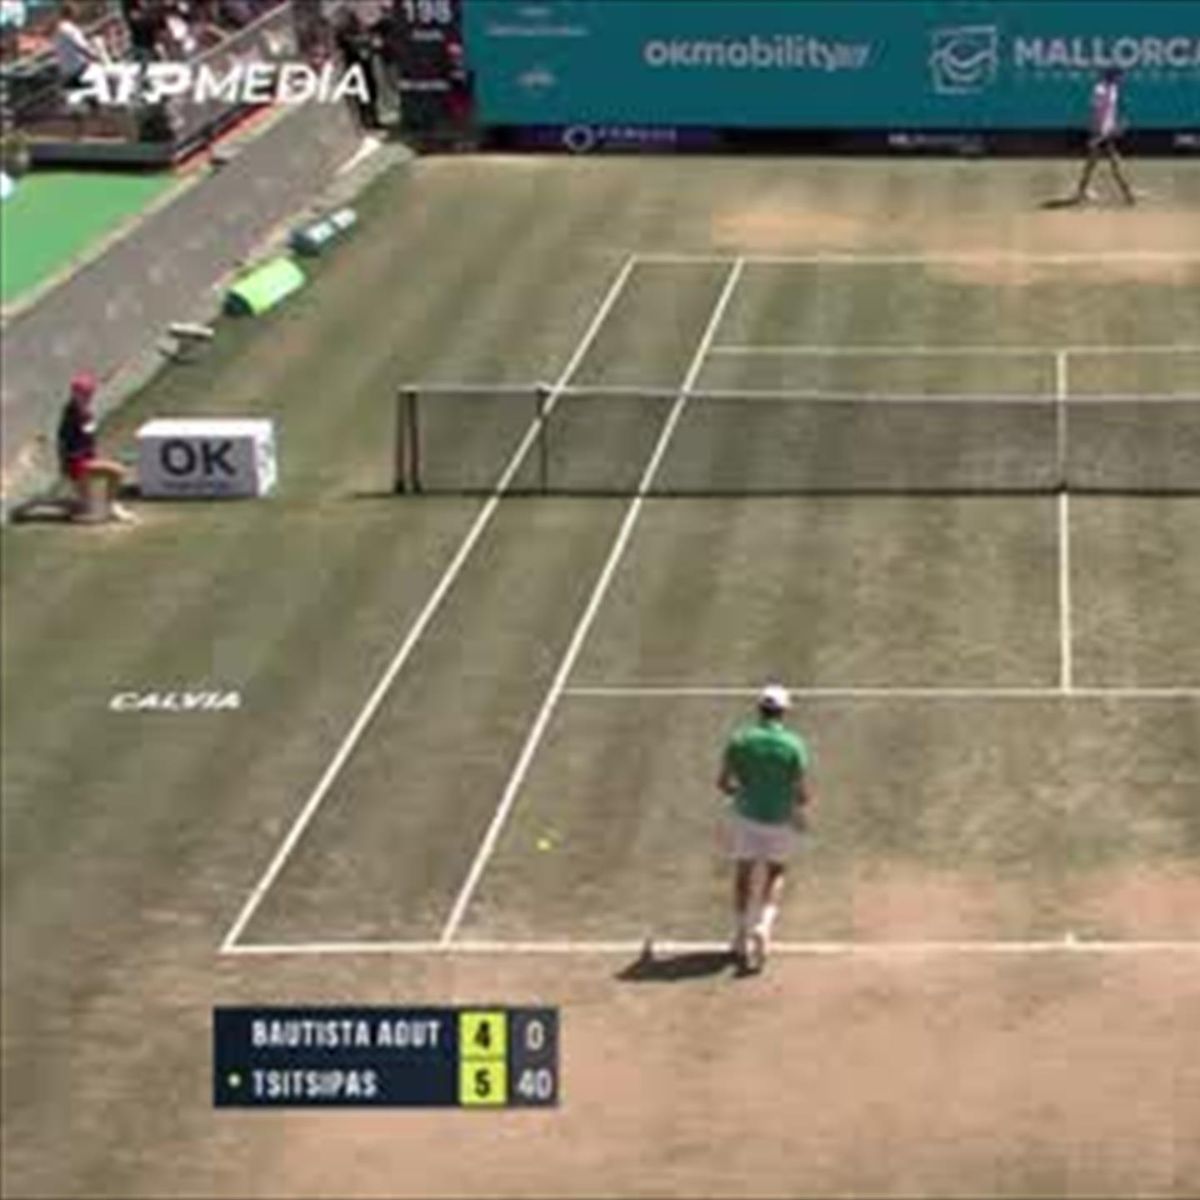 Stefanos Tsitsipas beats Roberto Bautista Agut in Mallorca final to clinch first title on grass - Tennis video